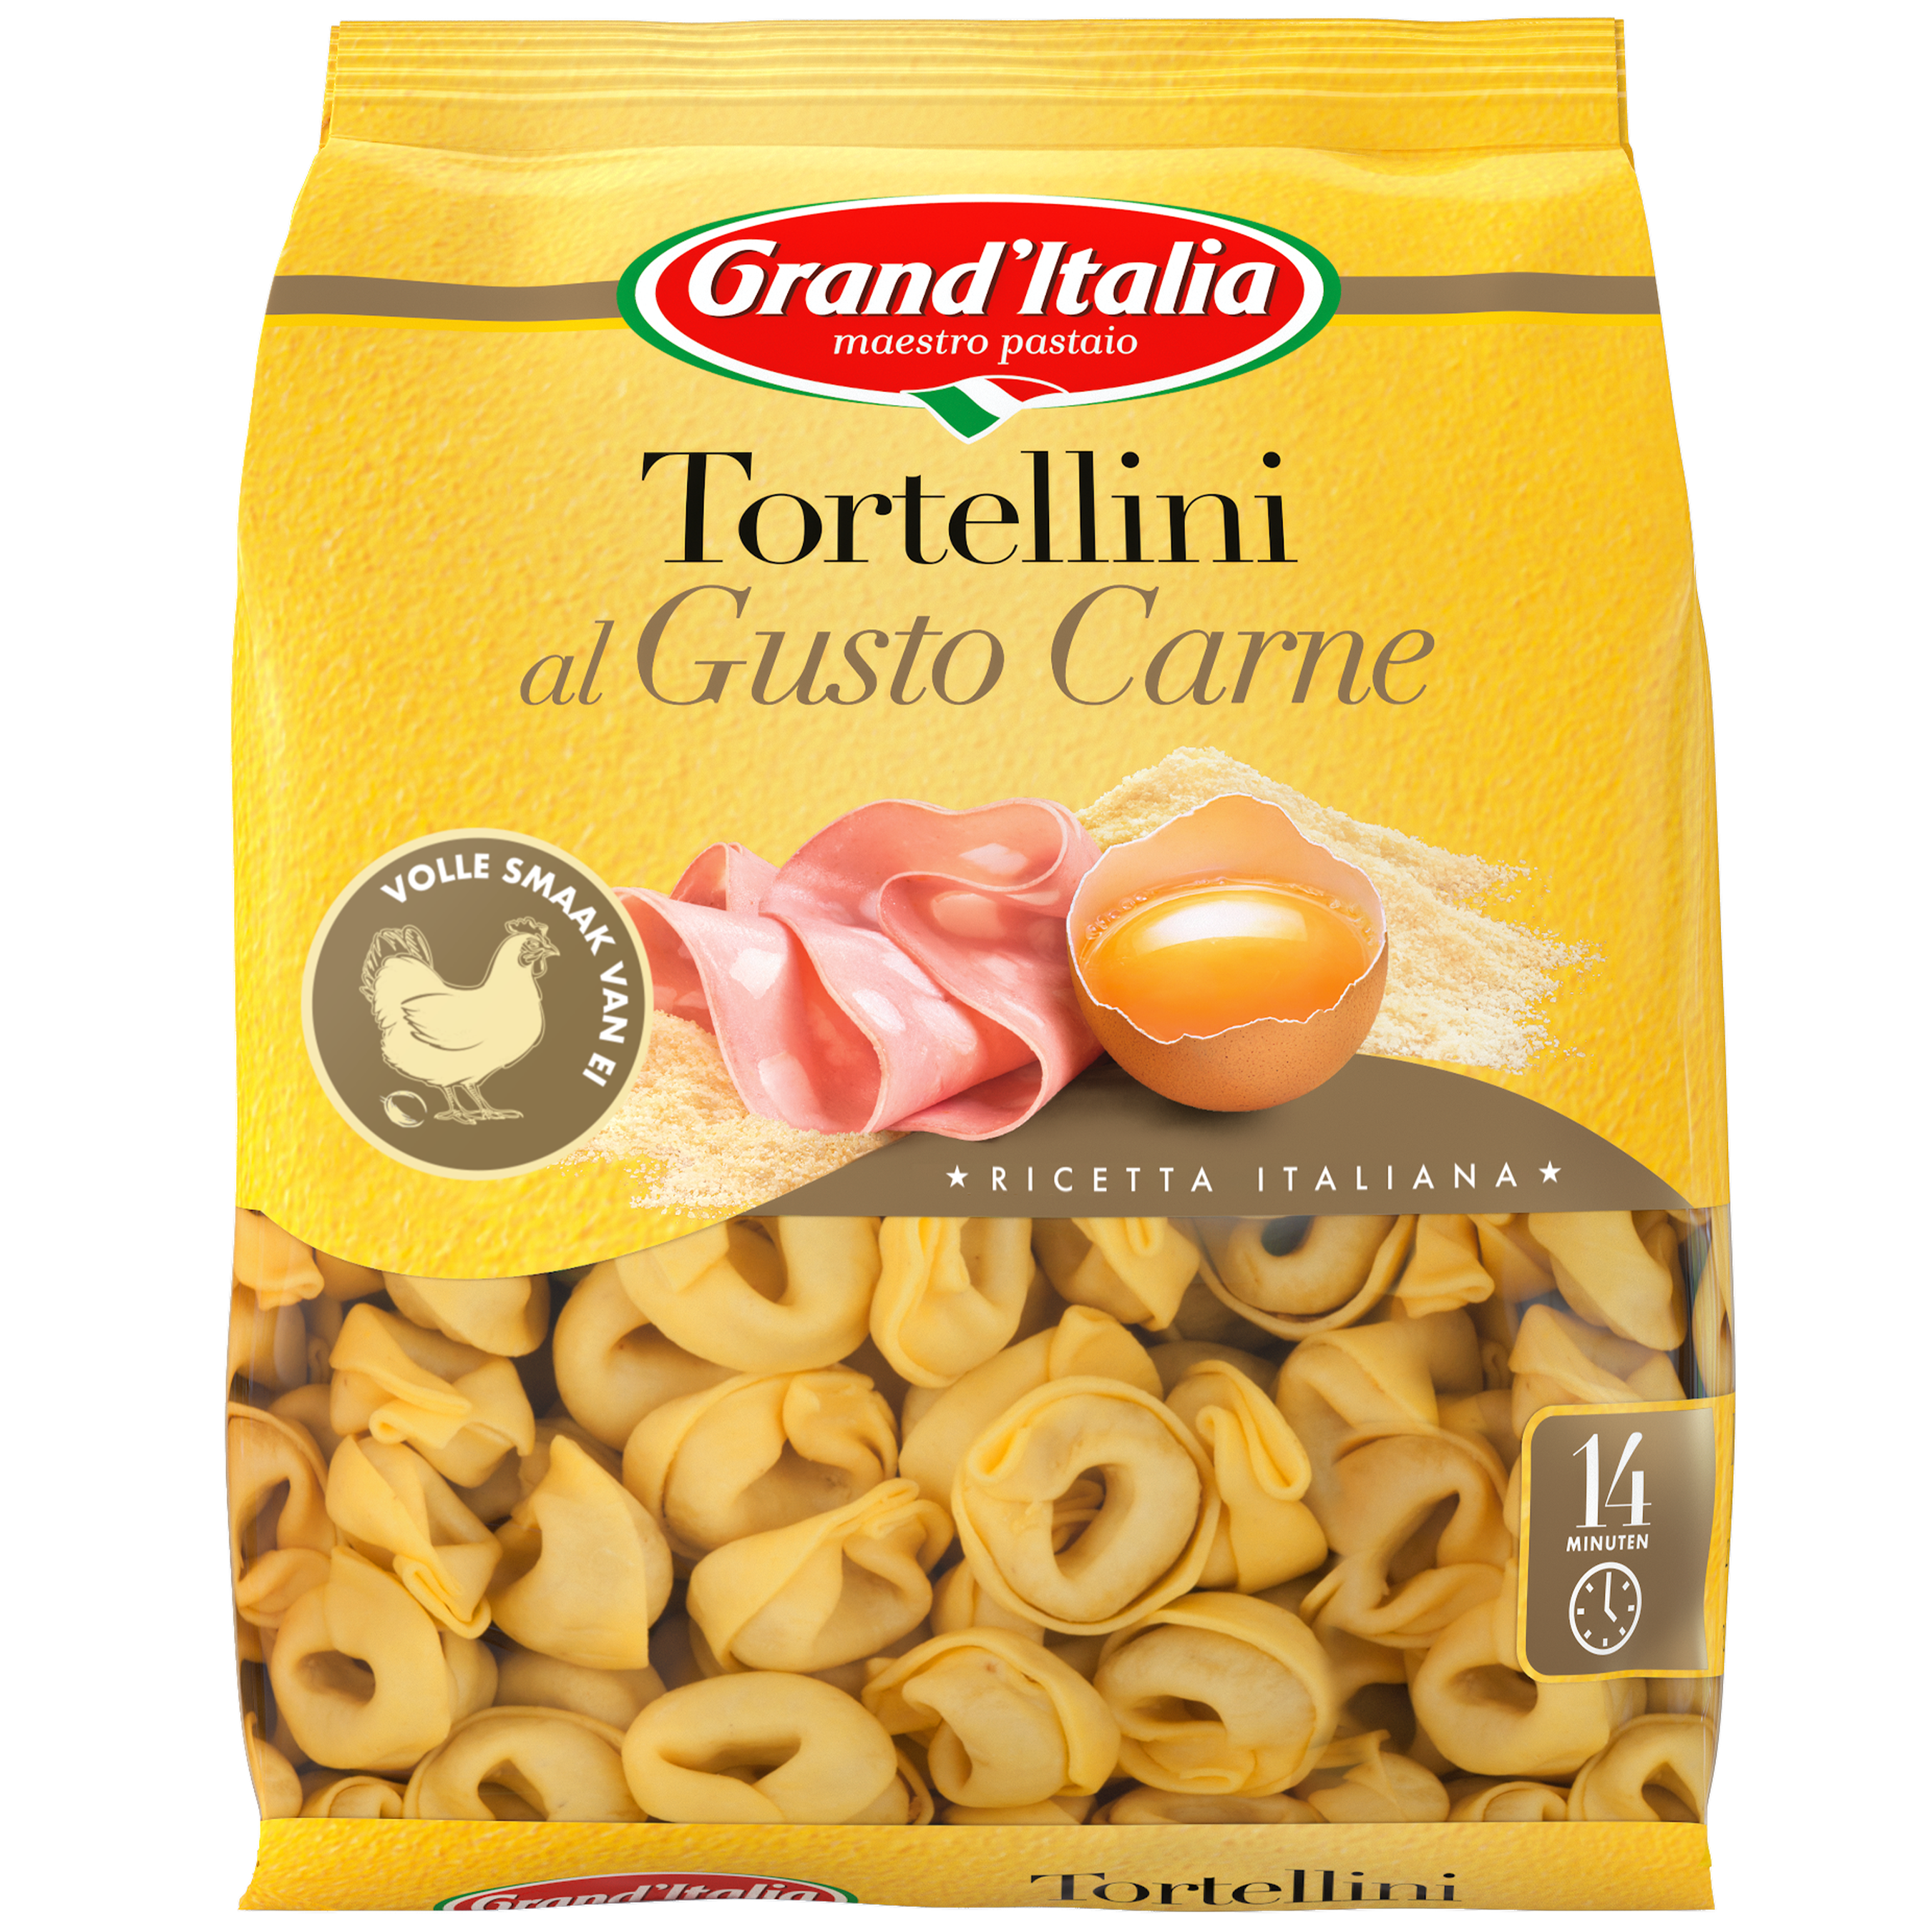 Gevulde pasta Tortellini al Gusto Carne 440g Grand'Italia